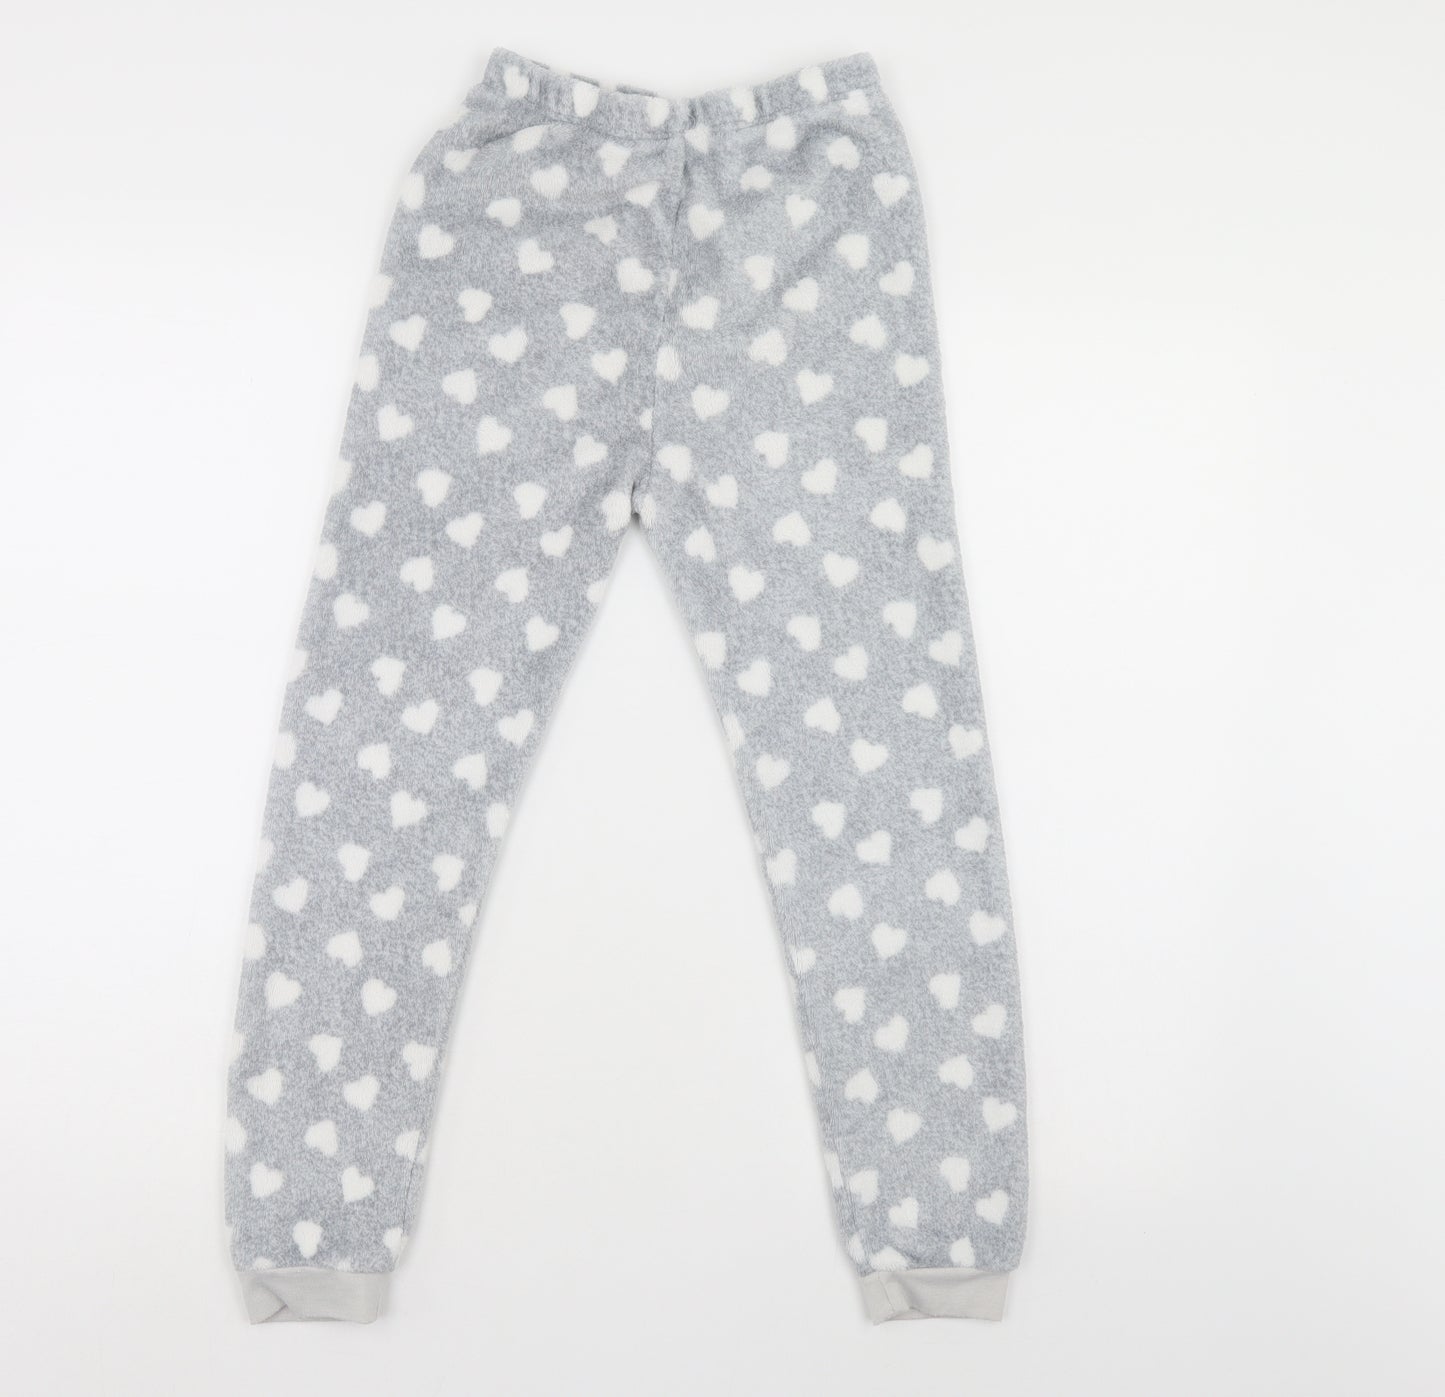 Primark Girls Grey Polka Dot   Pyjama Pants Size 9-10 Years